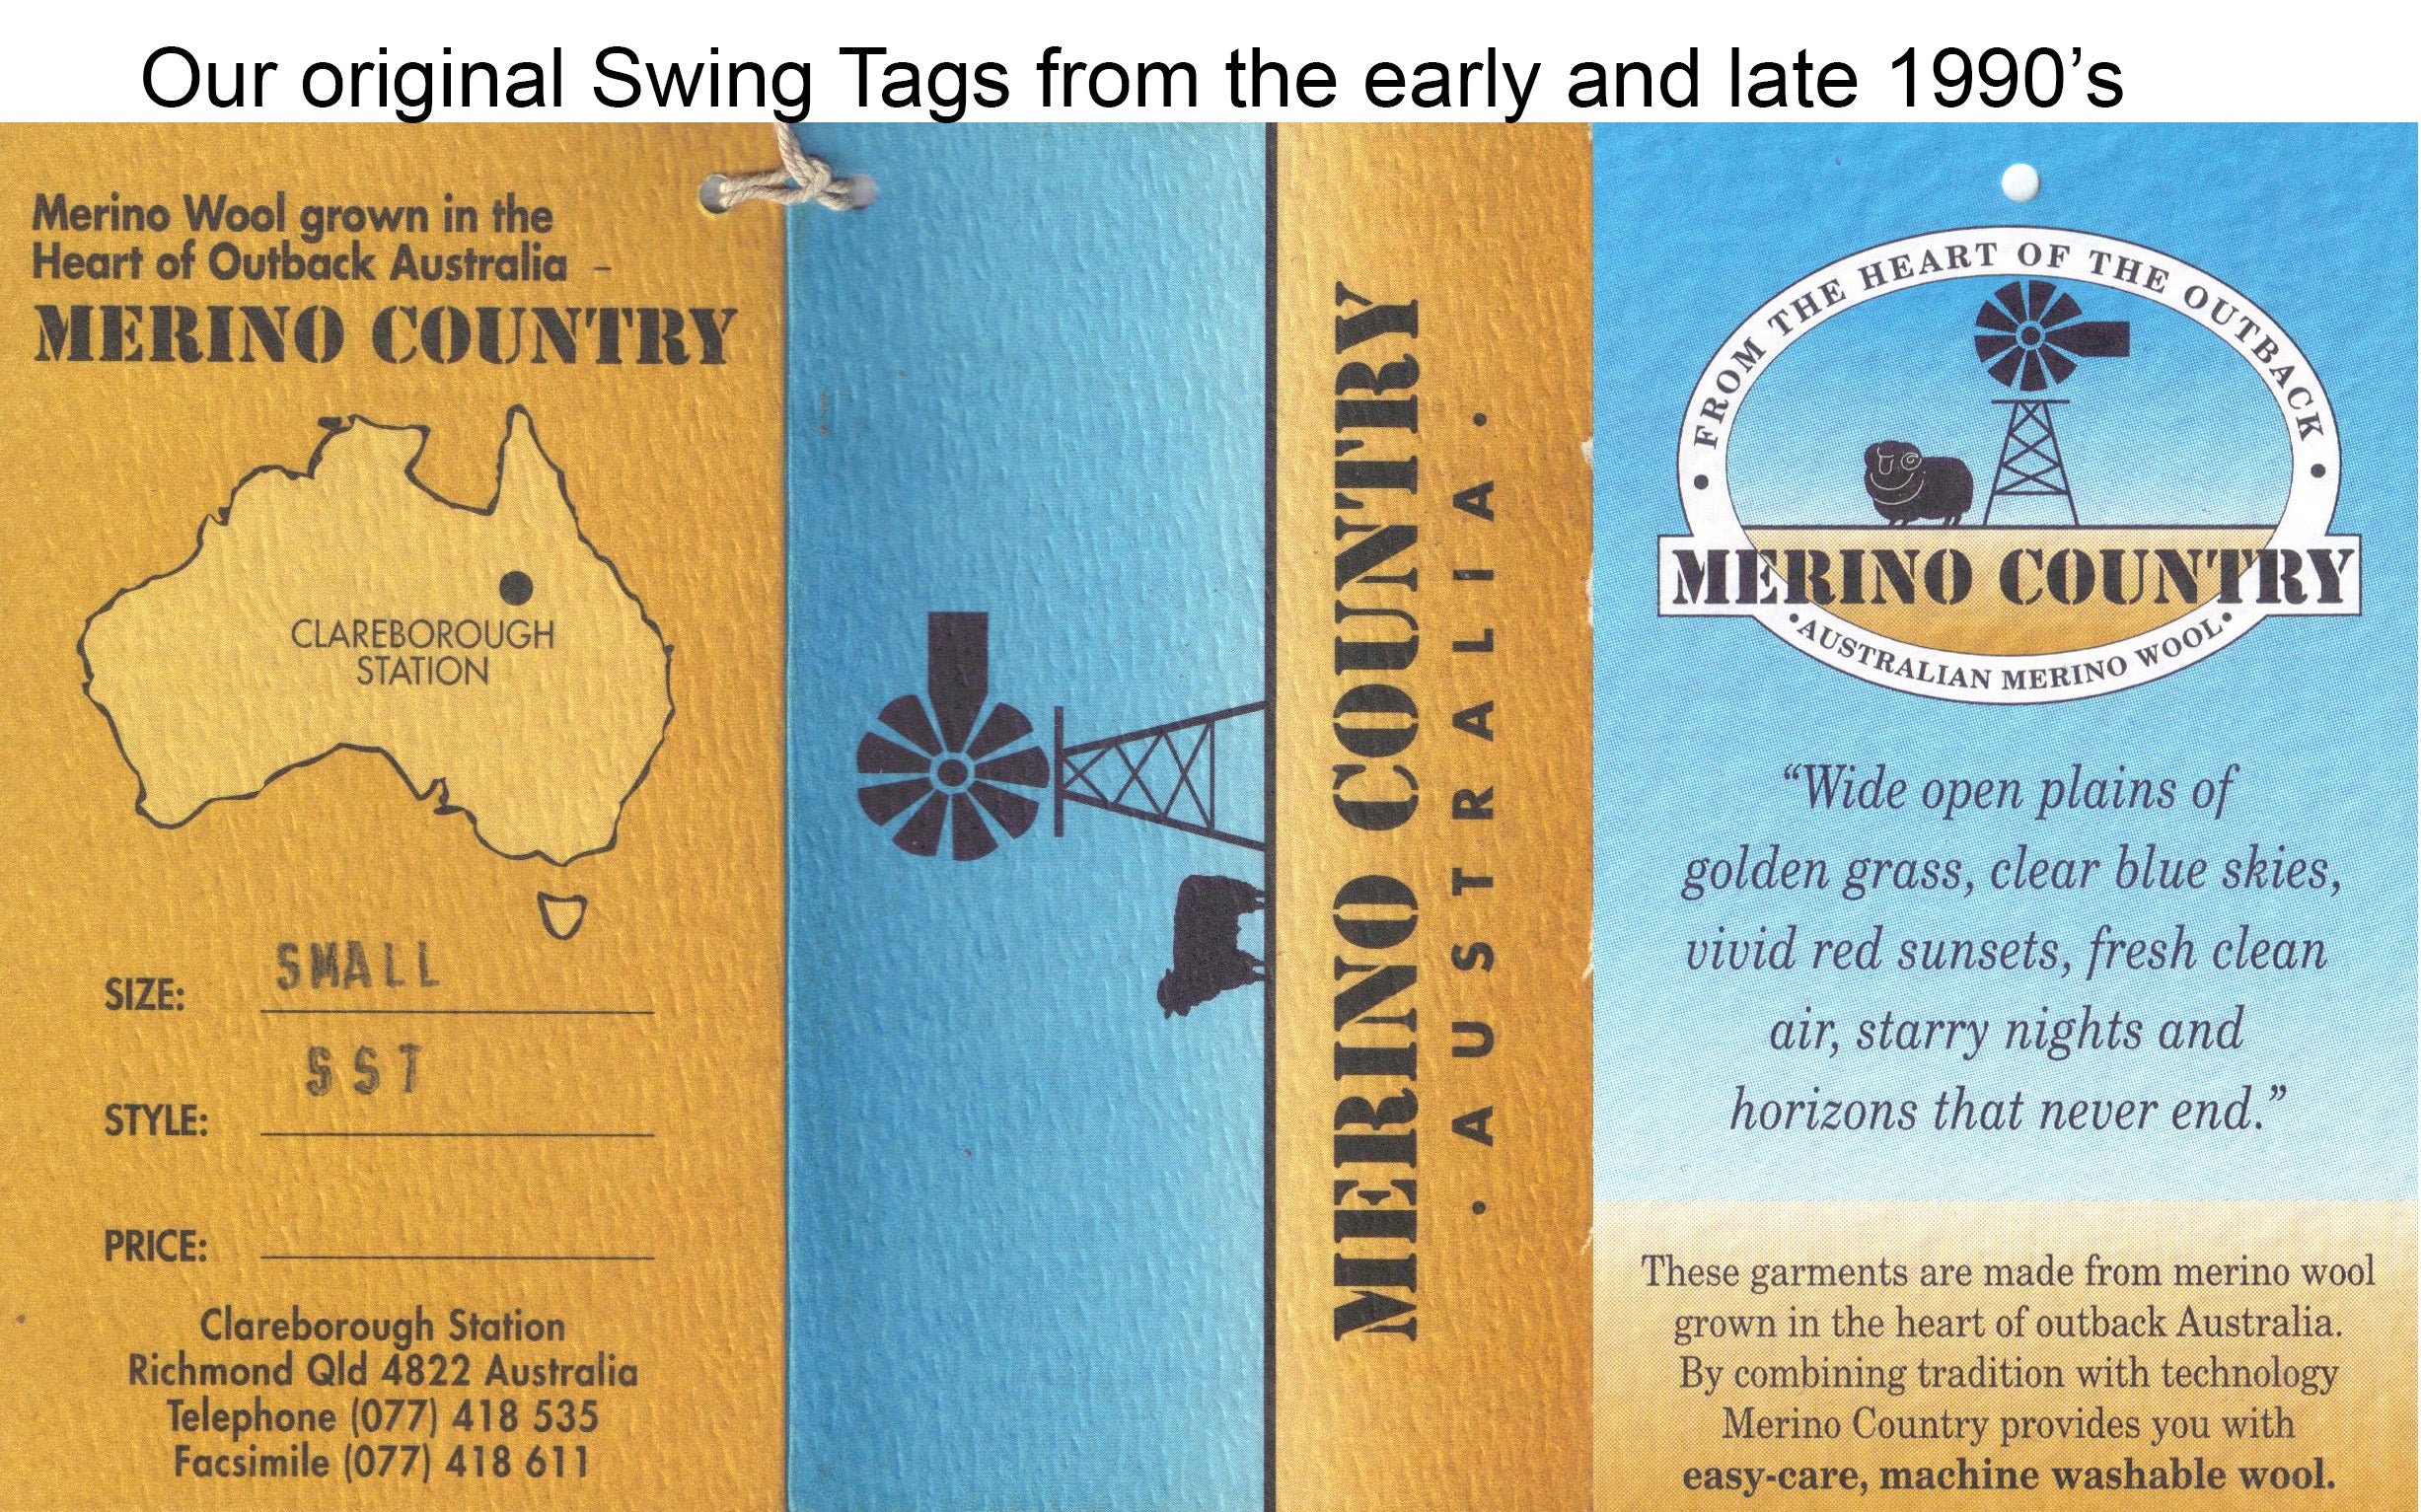 Merino Country Swing tag